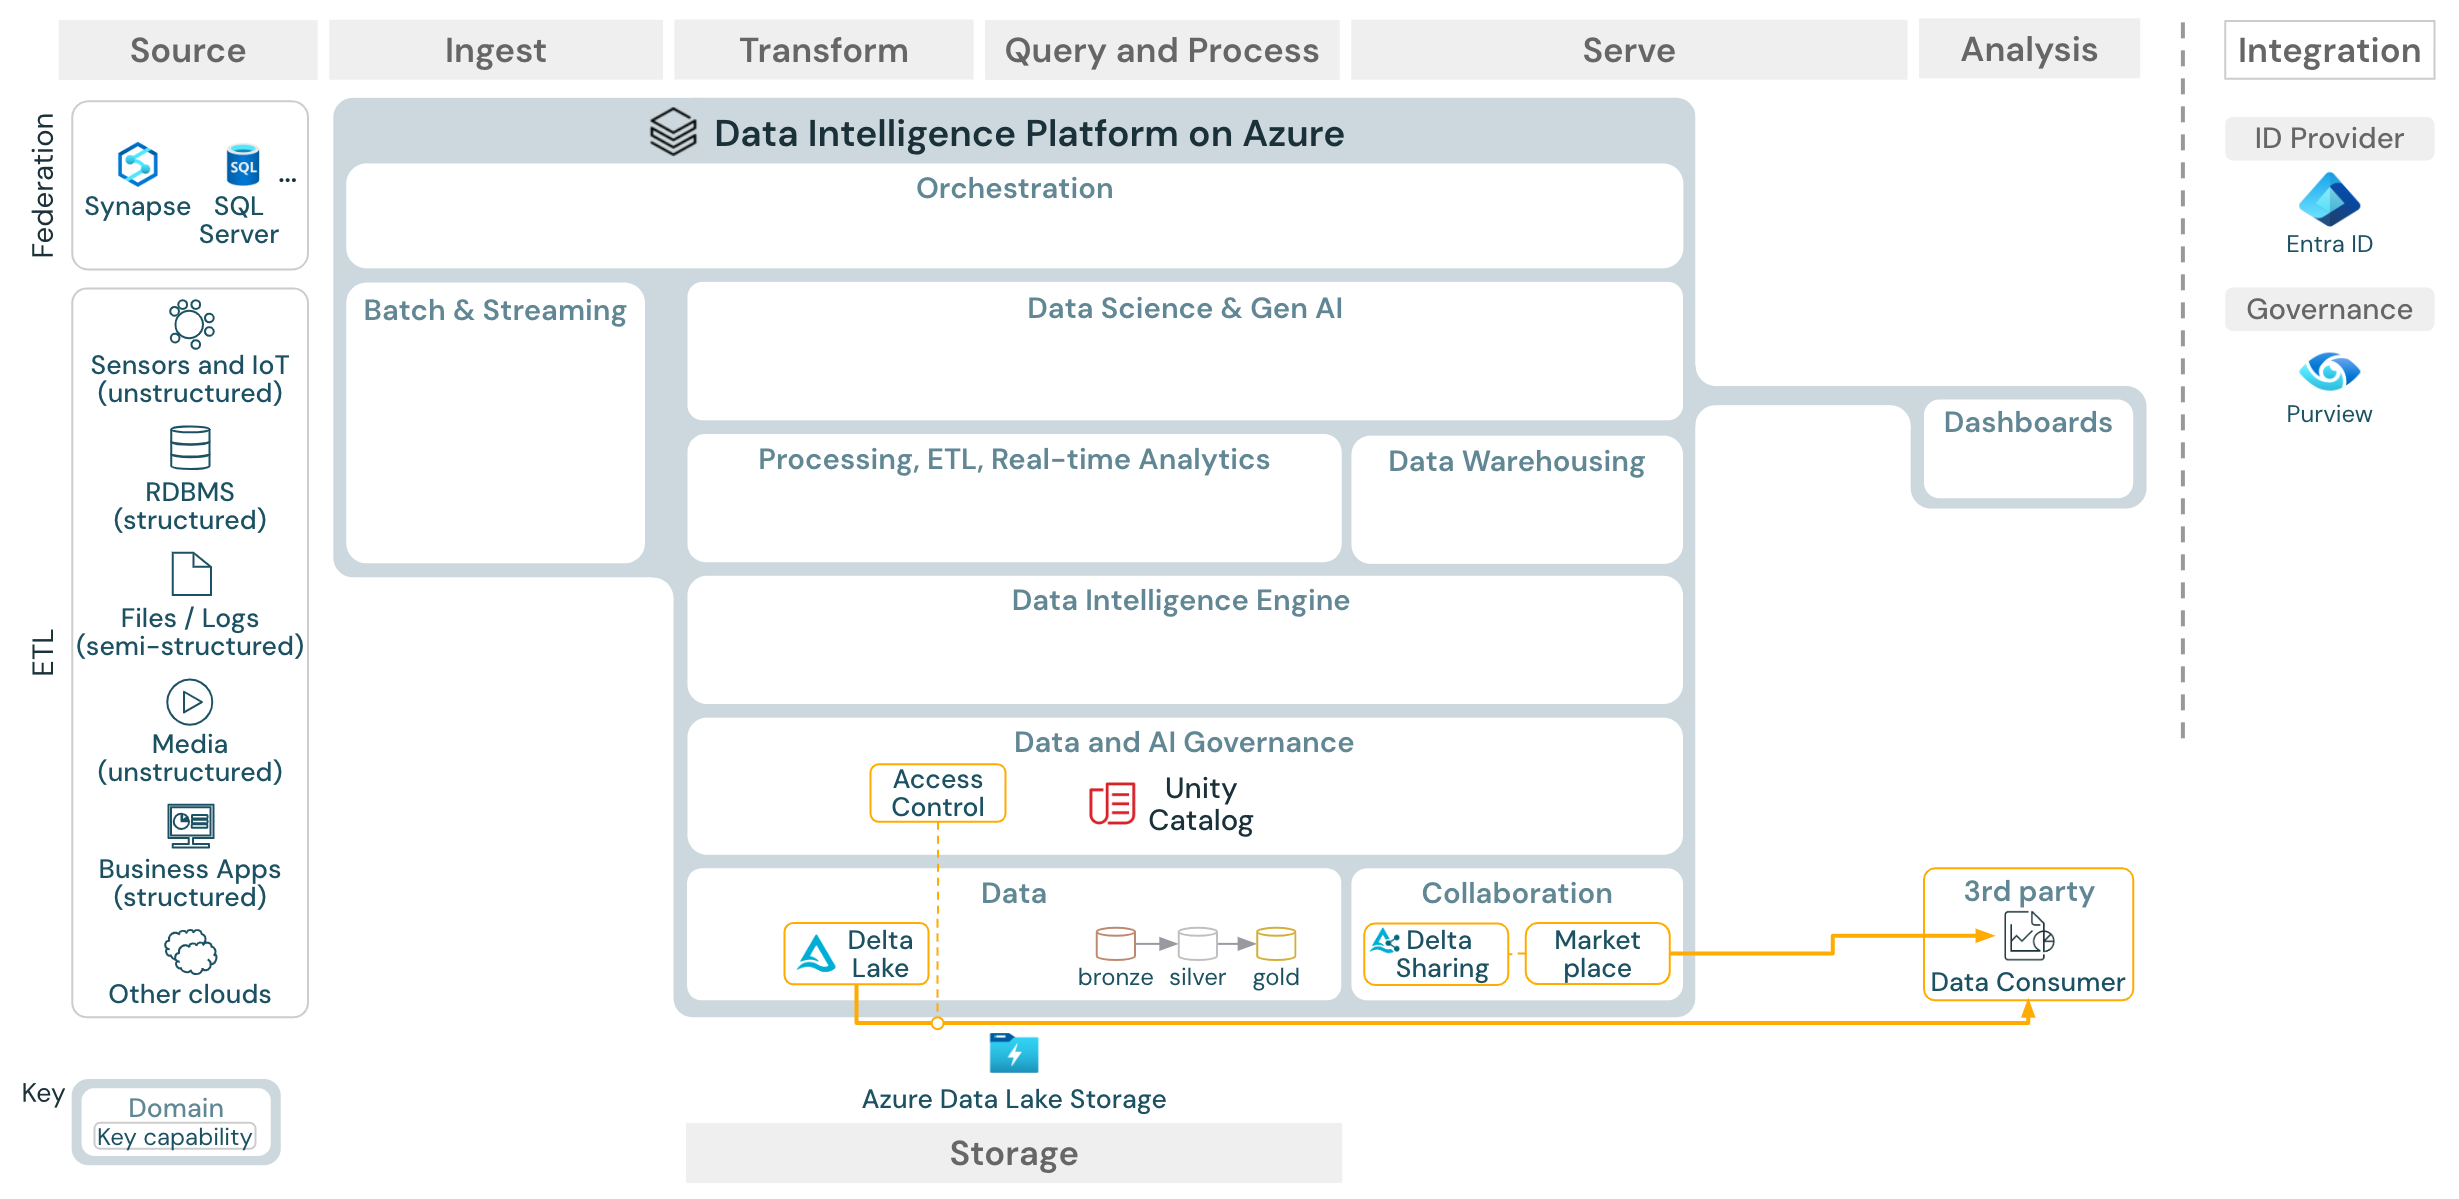 Enterprise data sharing reference architecture for Azure Databricks